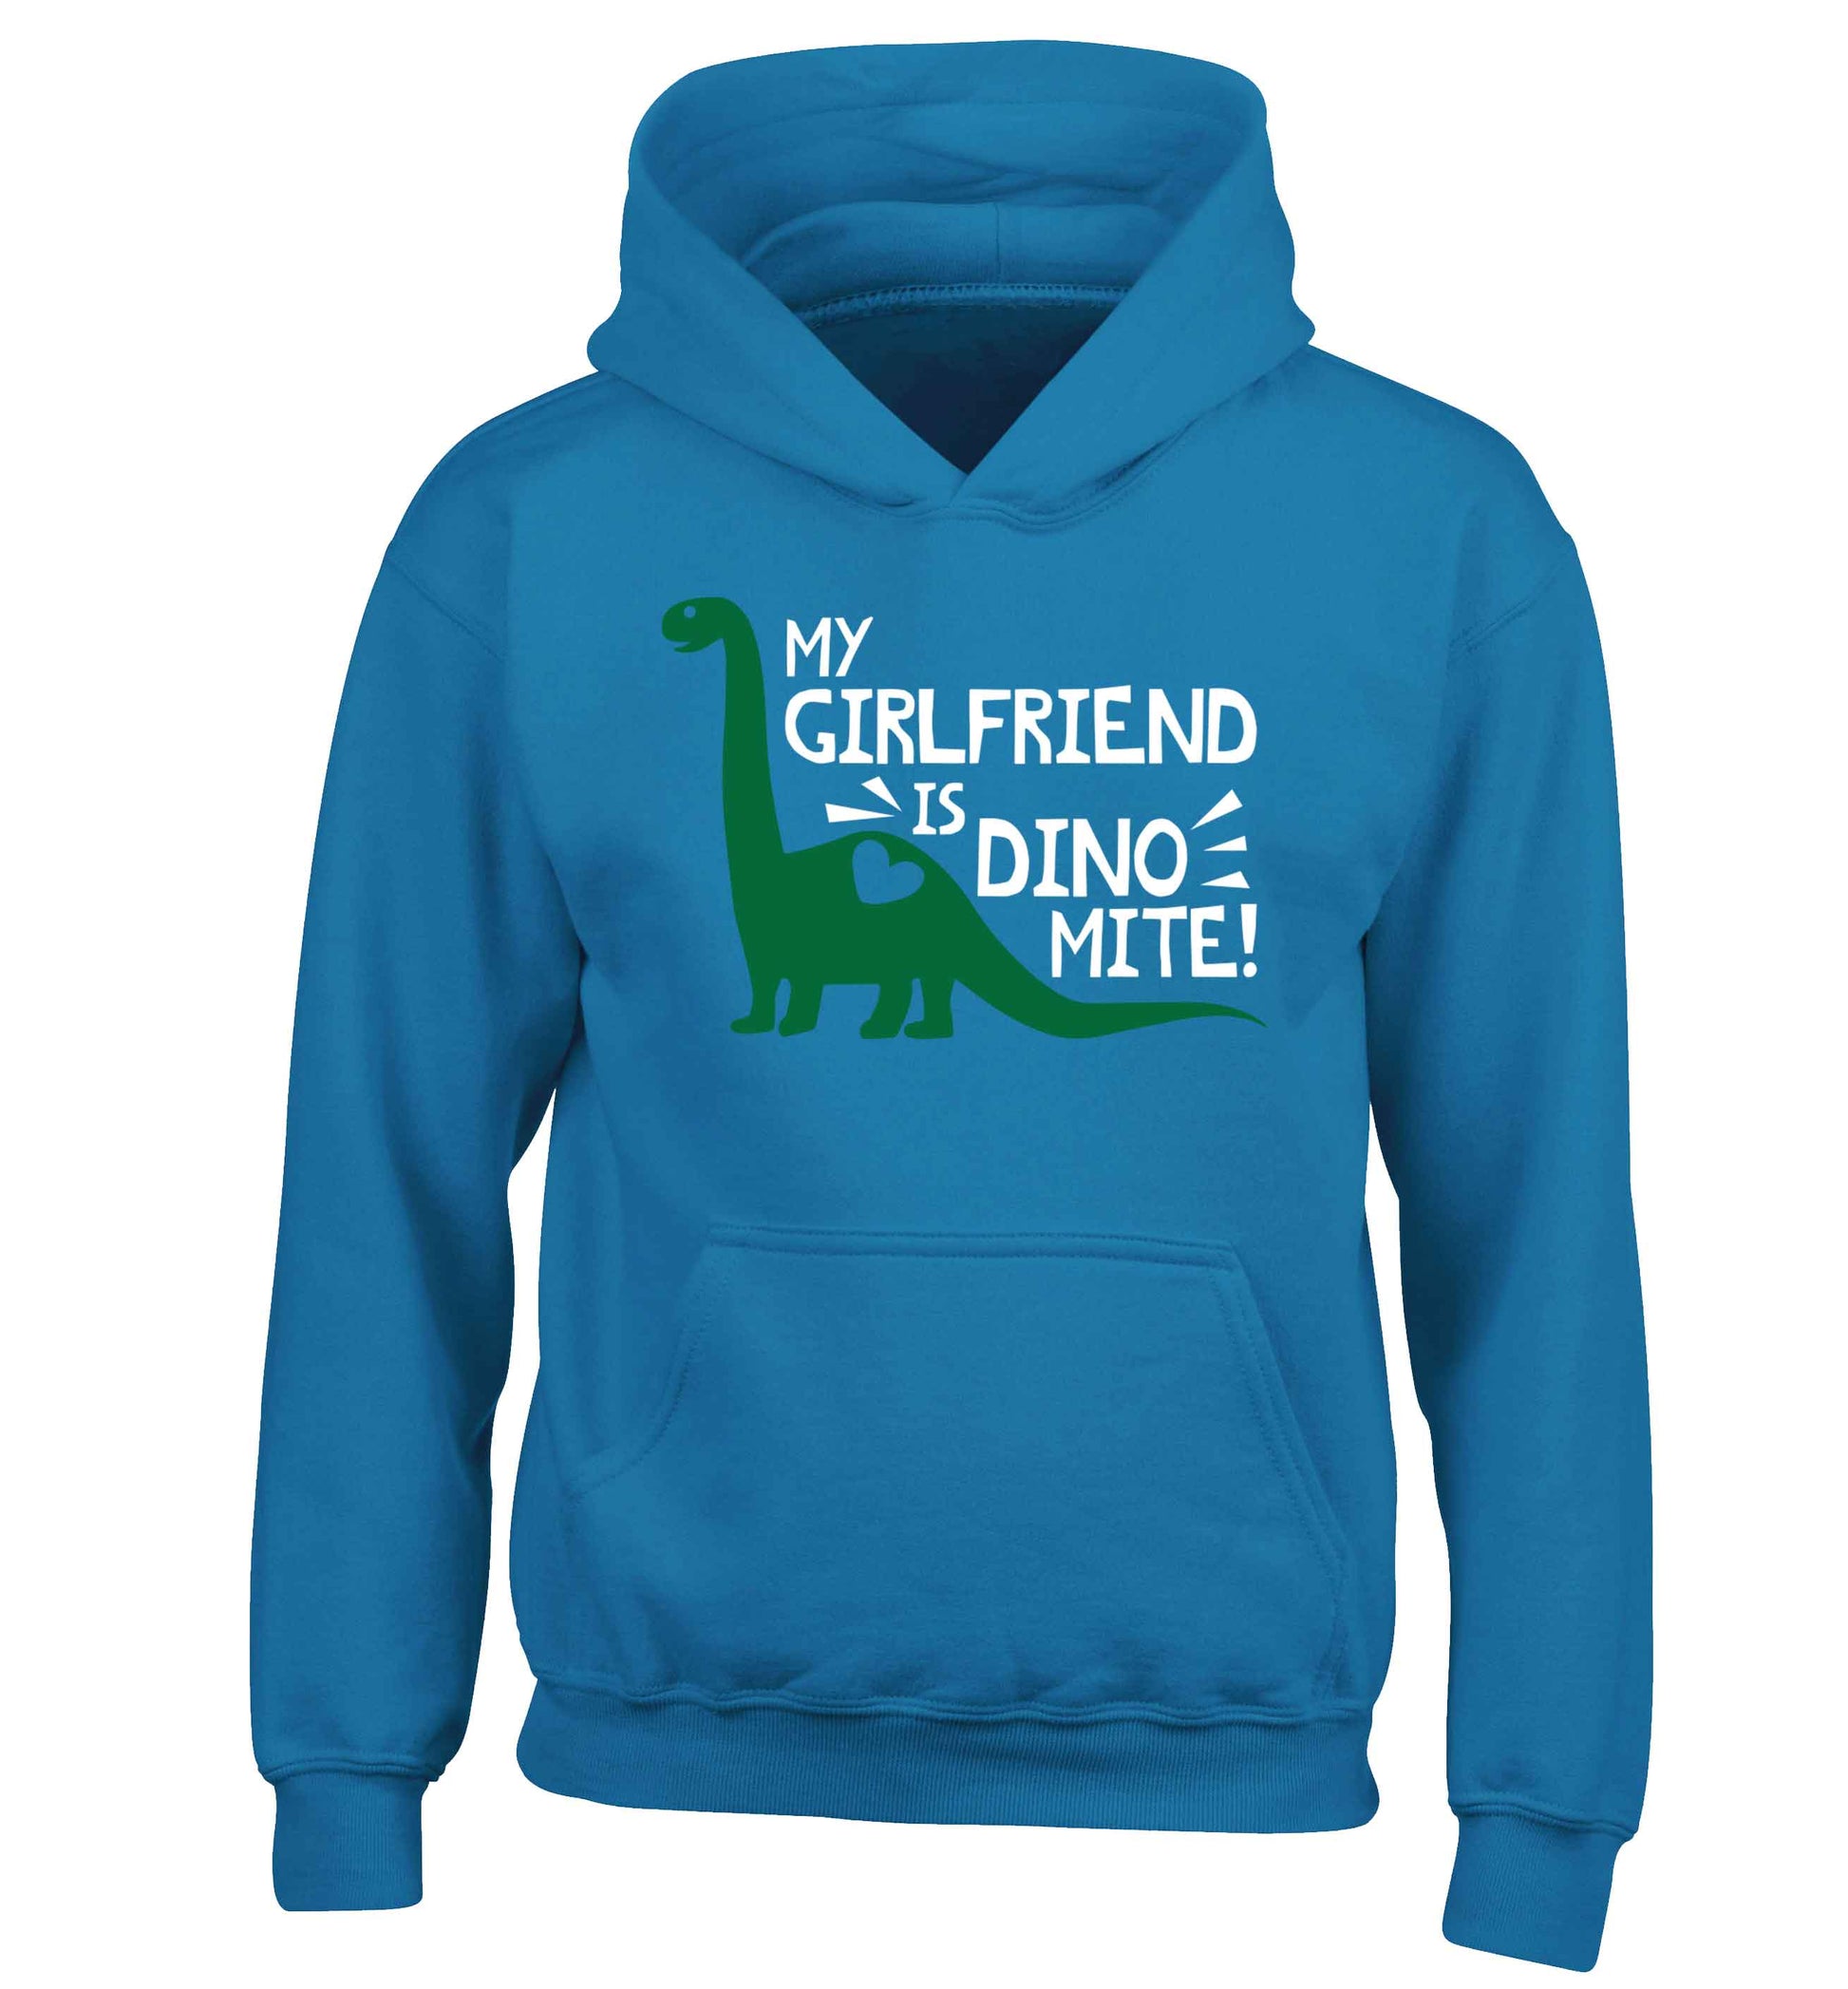 My girlfriend is dinomite! children's blue hoodie 12-13 Years